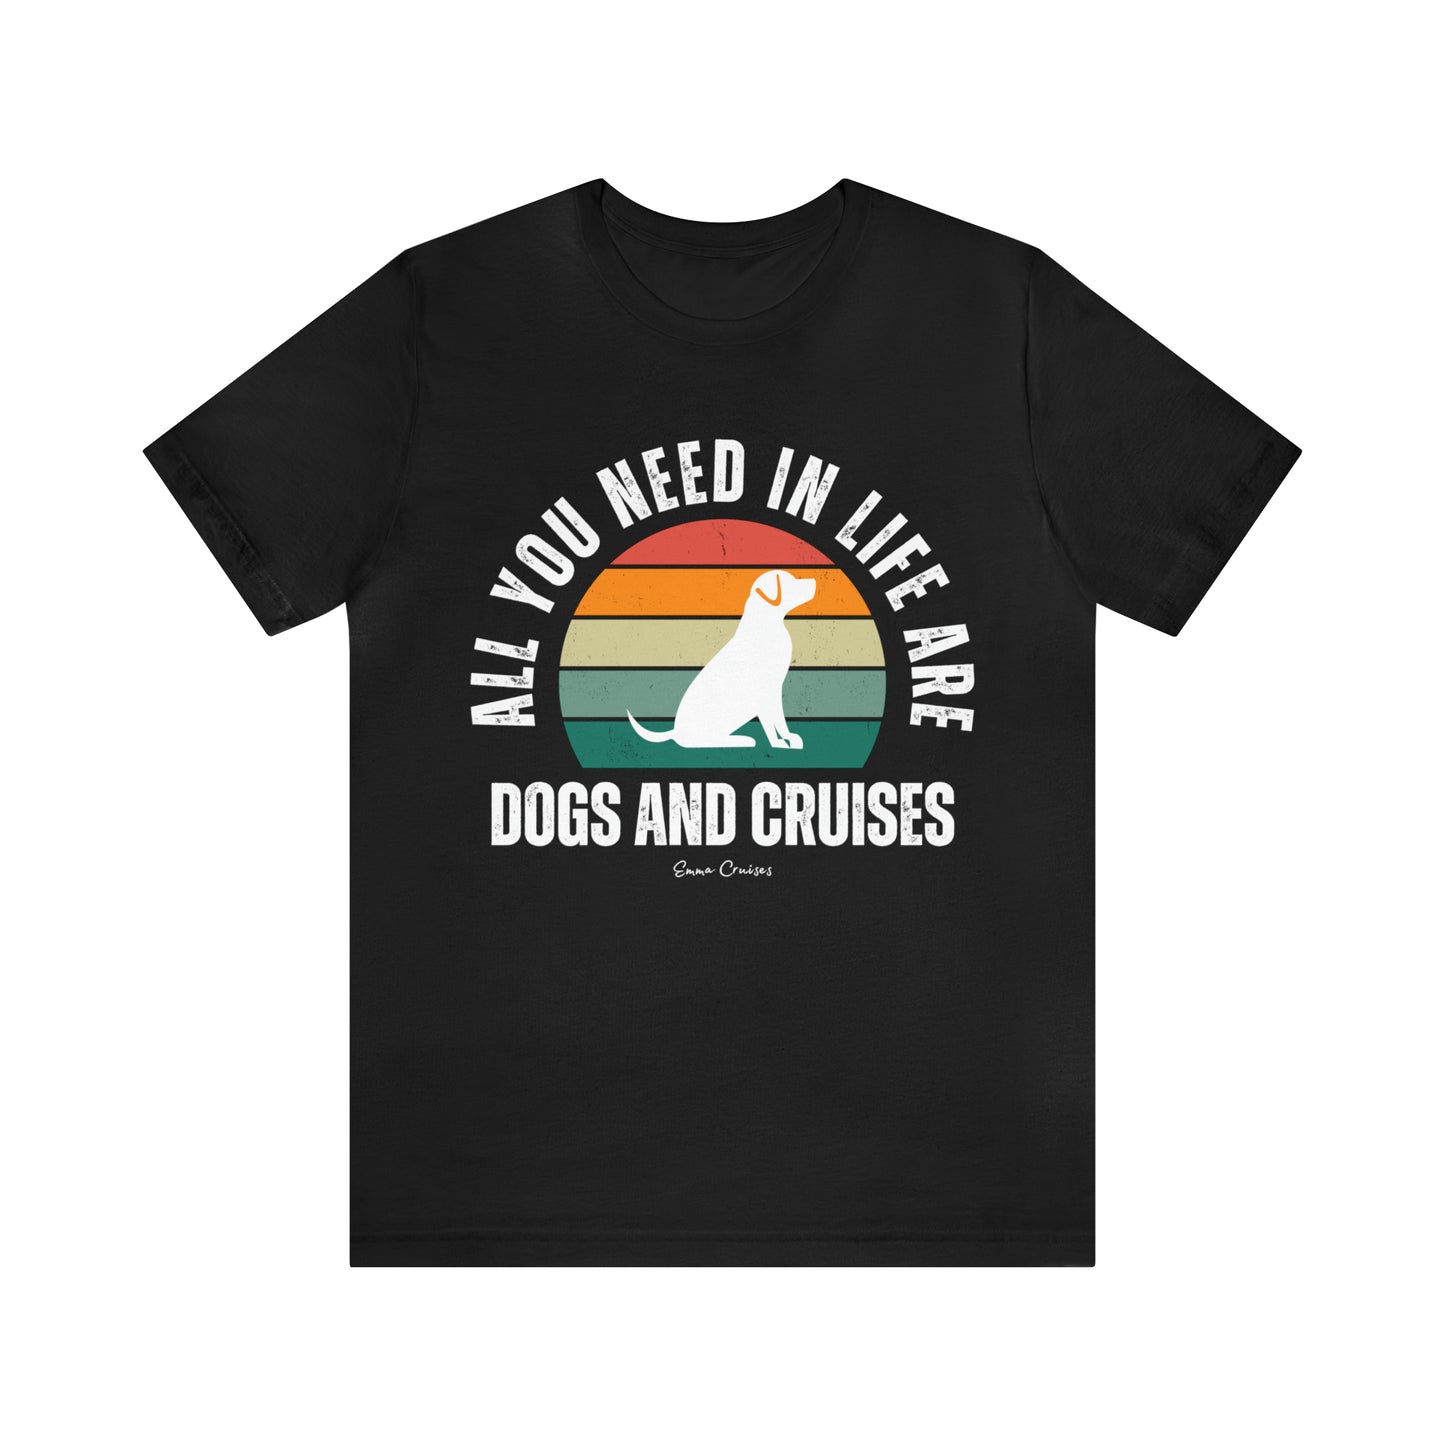 Dogs and Cruises - UNISEX T-Shirt